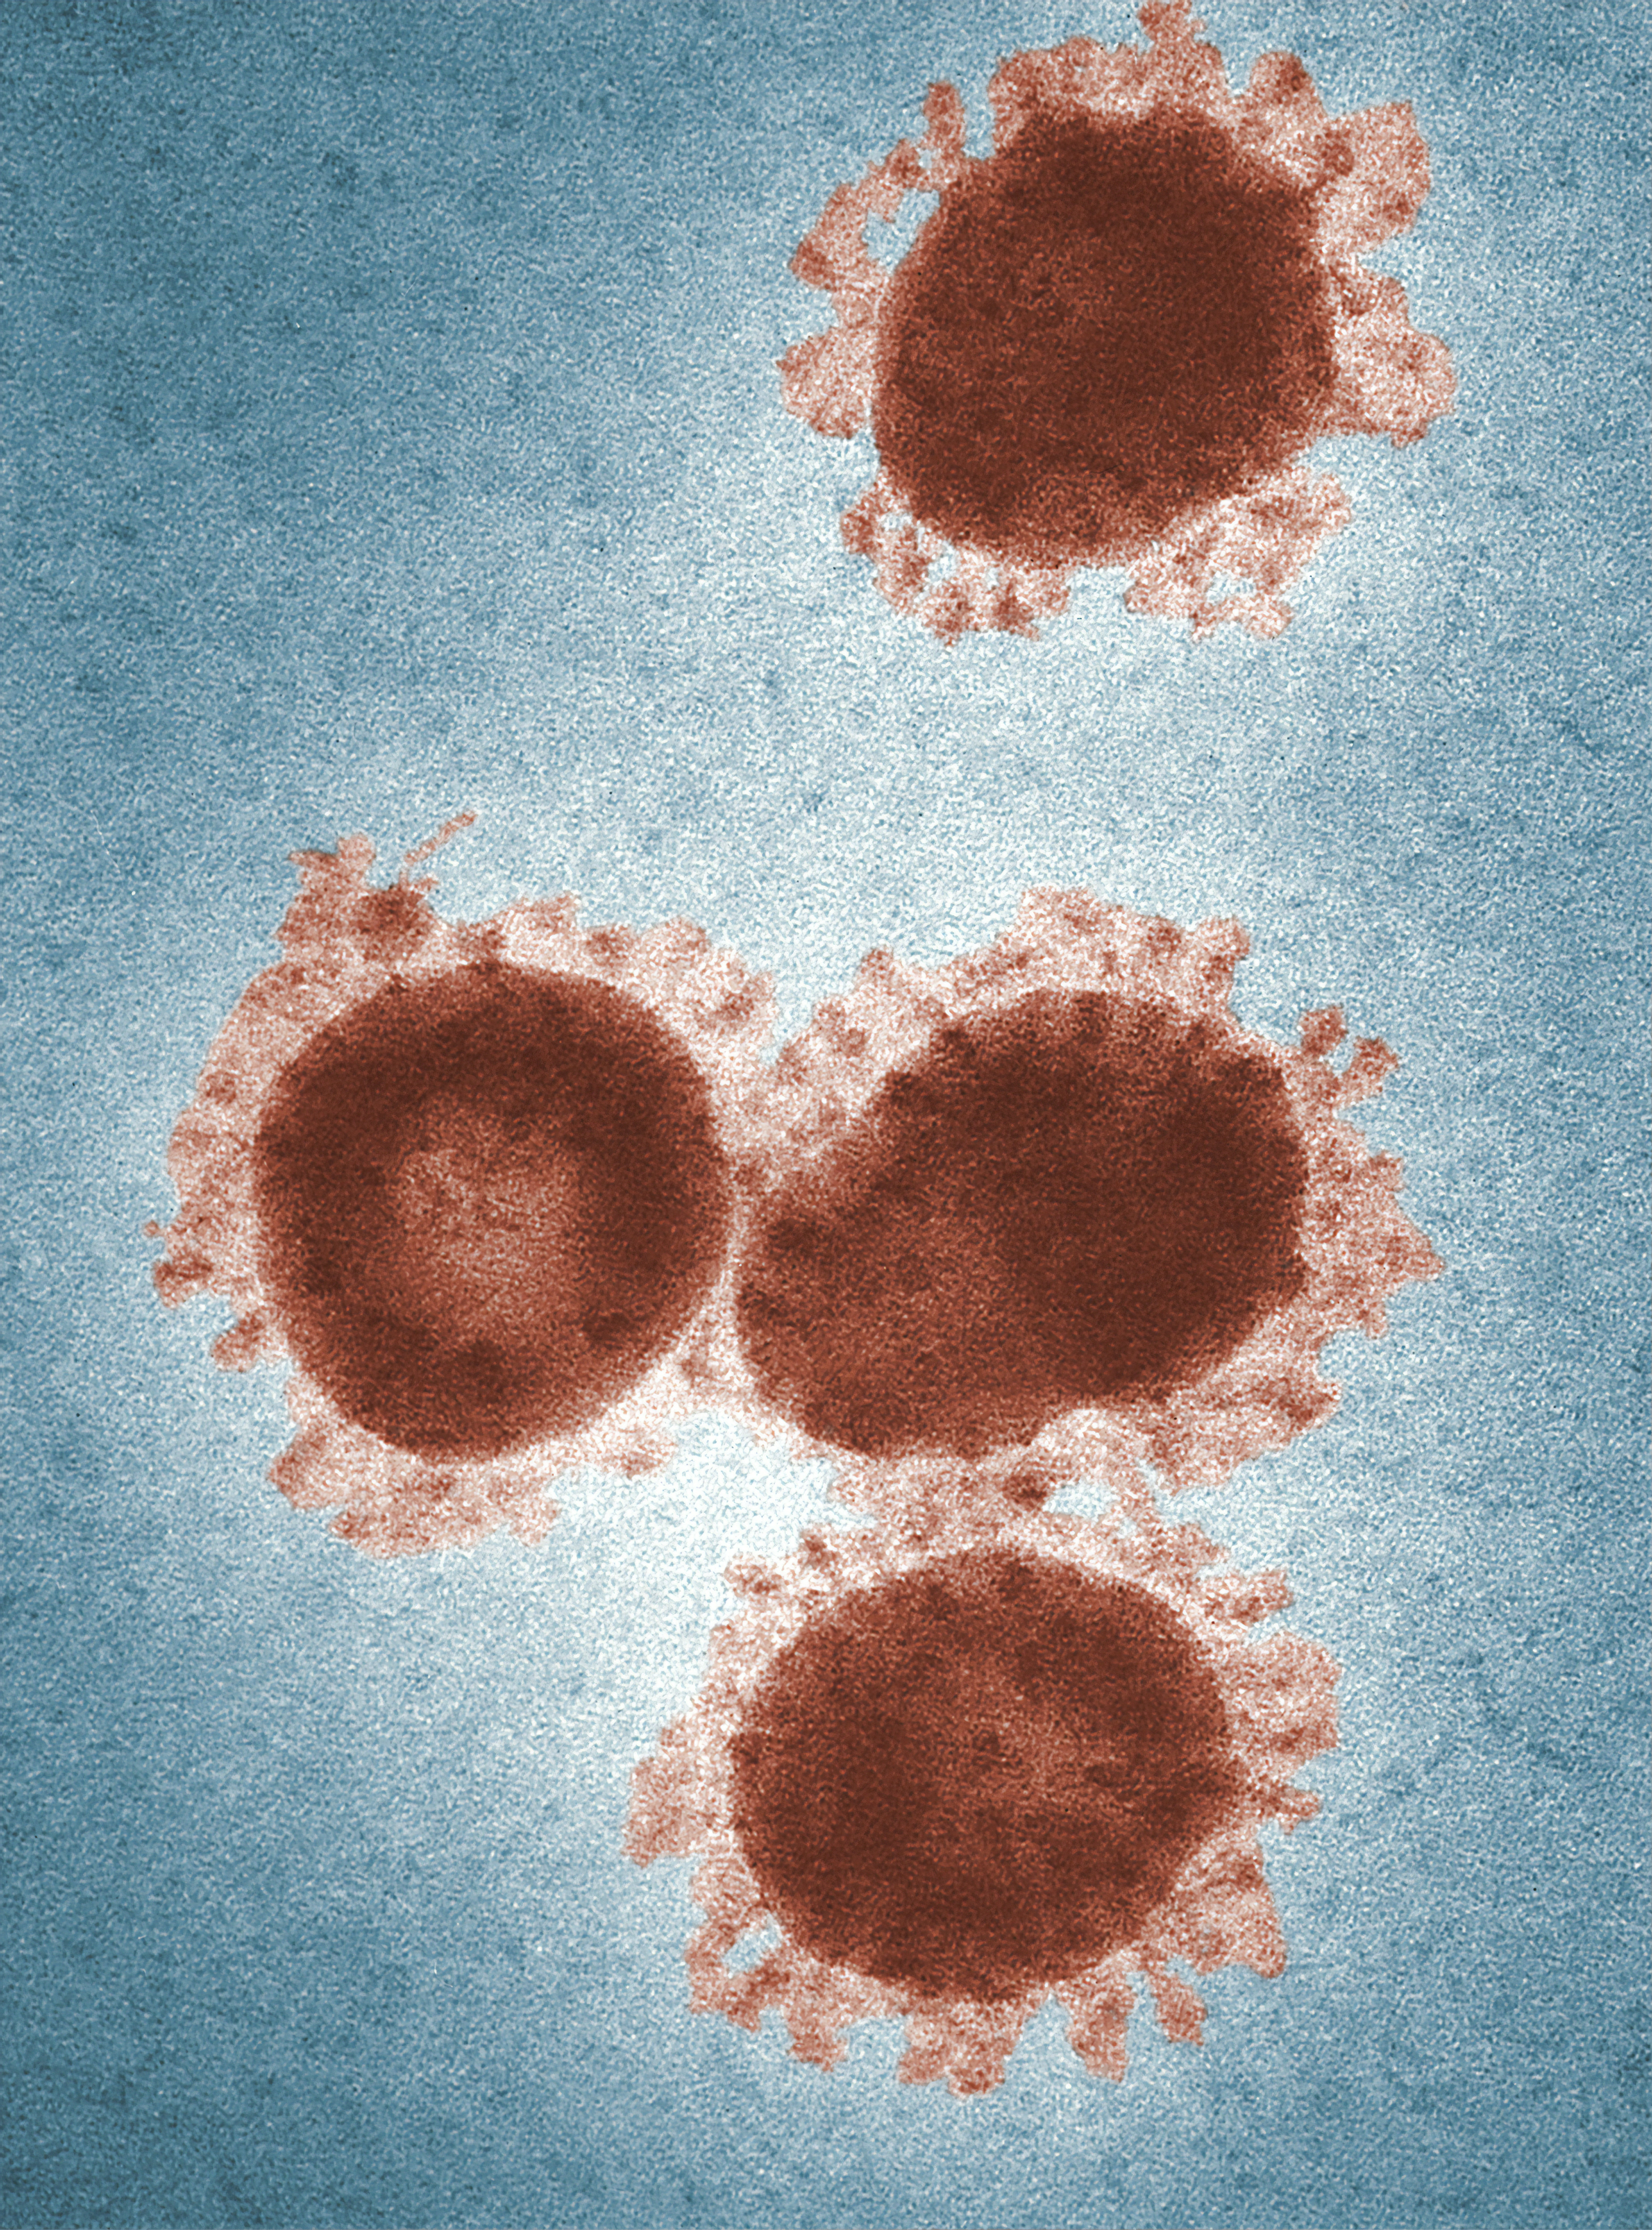 dark orange-red viruses against a blue background